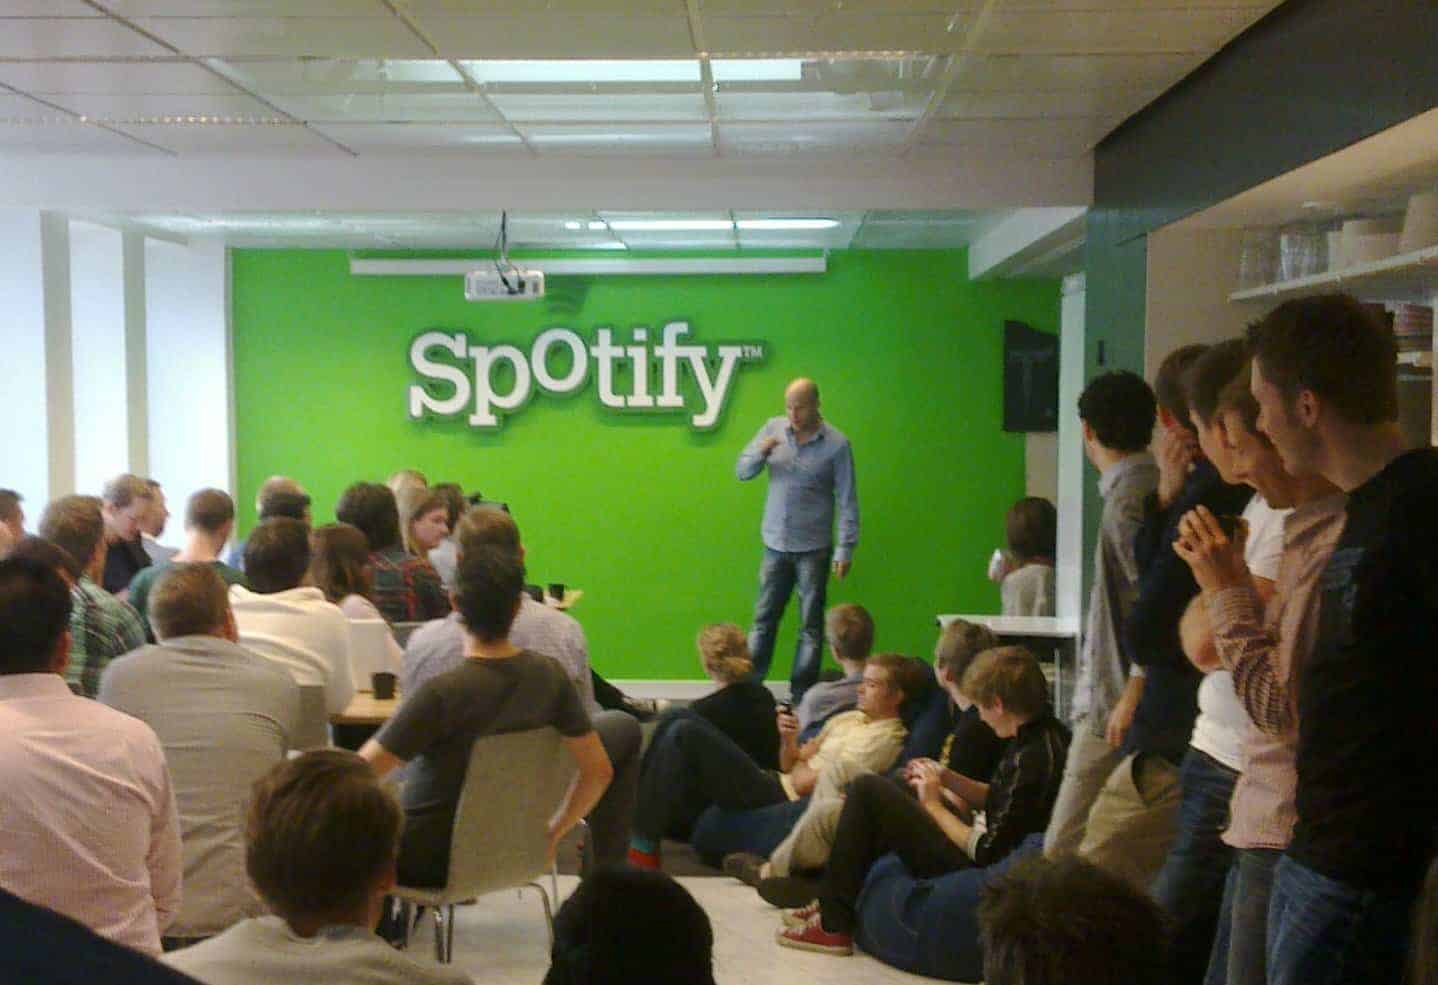 Spotify going public through a direct public offering https://commons.wikimedia.org/wiki/File:Daniel_Ek_addressing_Spotify_staff.jpg